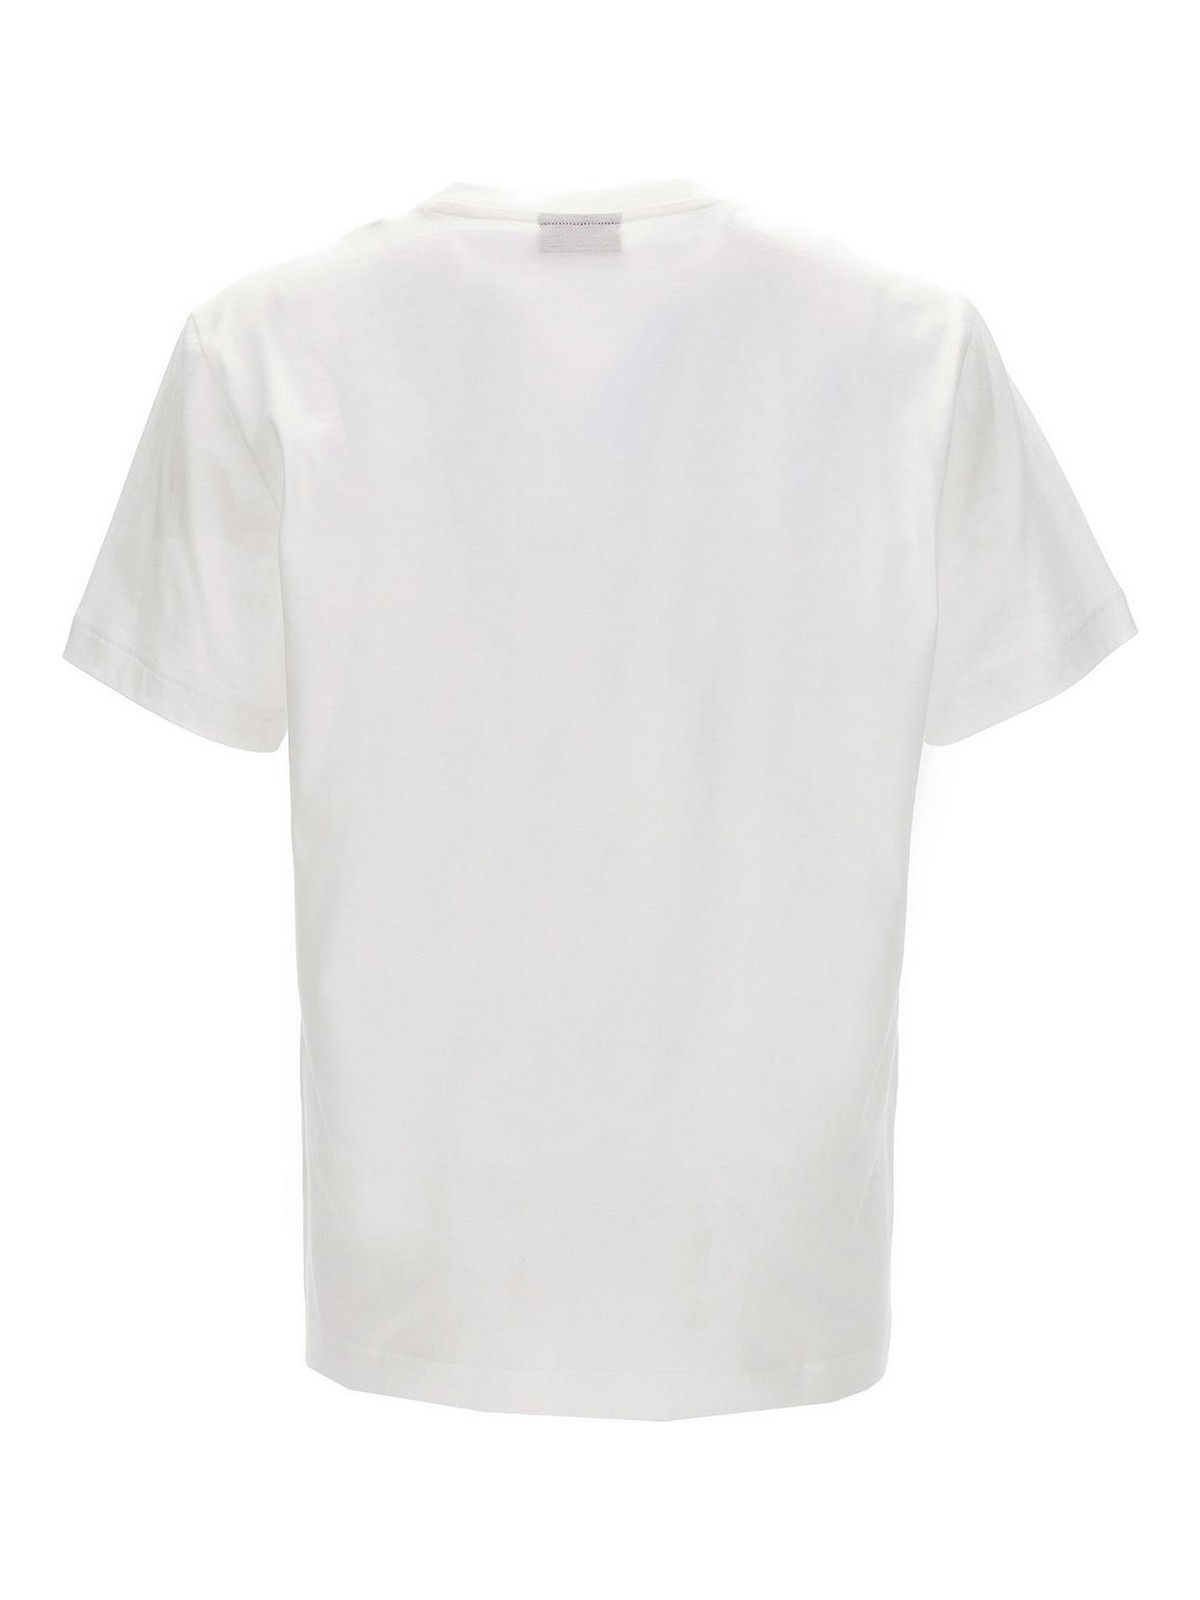 Shop Missoni Camiseta - Blanco